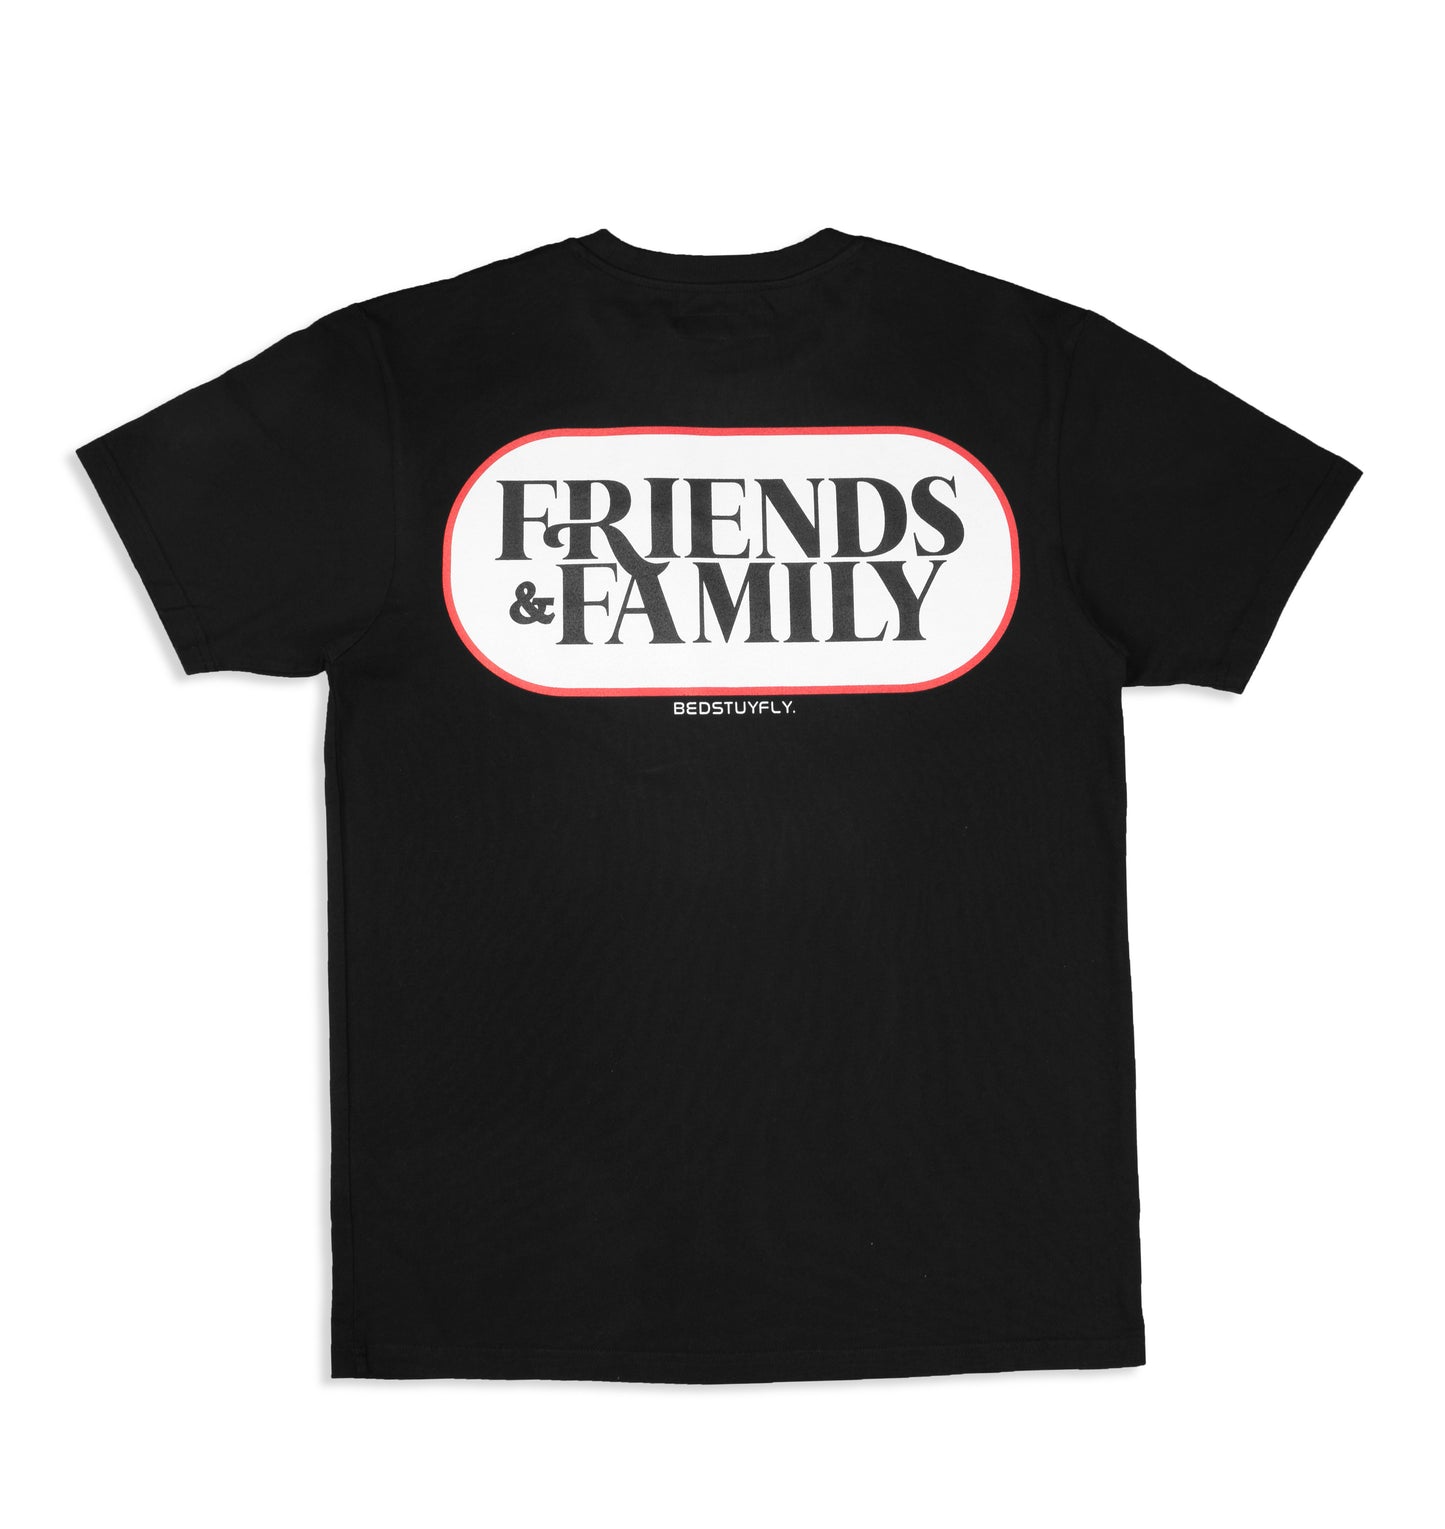 Friends & Family T-Shirt - Bedstuyfly